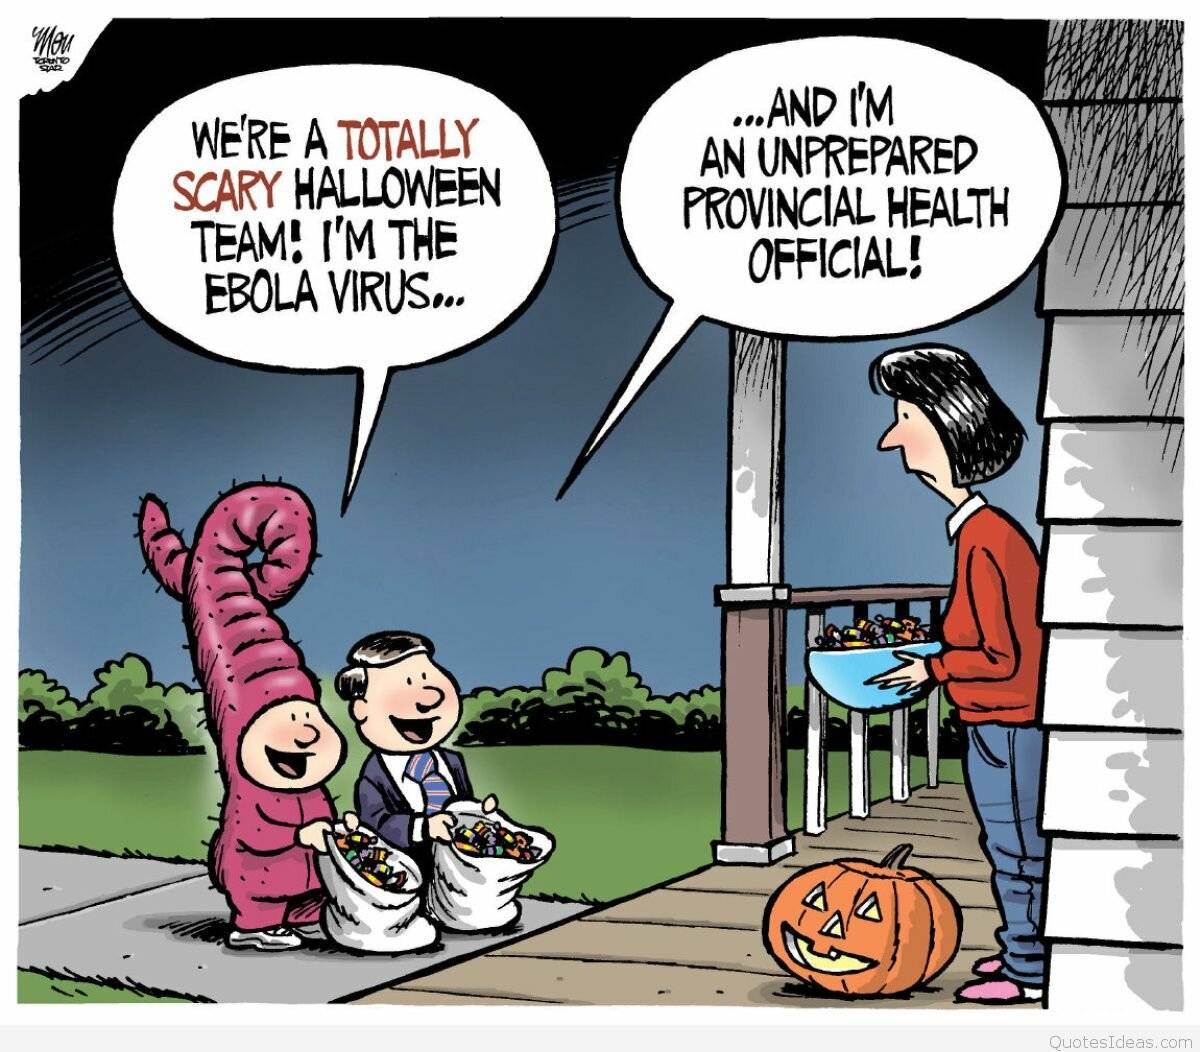 Scary-funny-Halloween-cartoon-quote.jpg